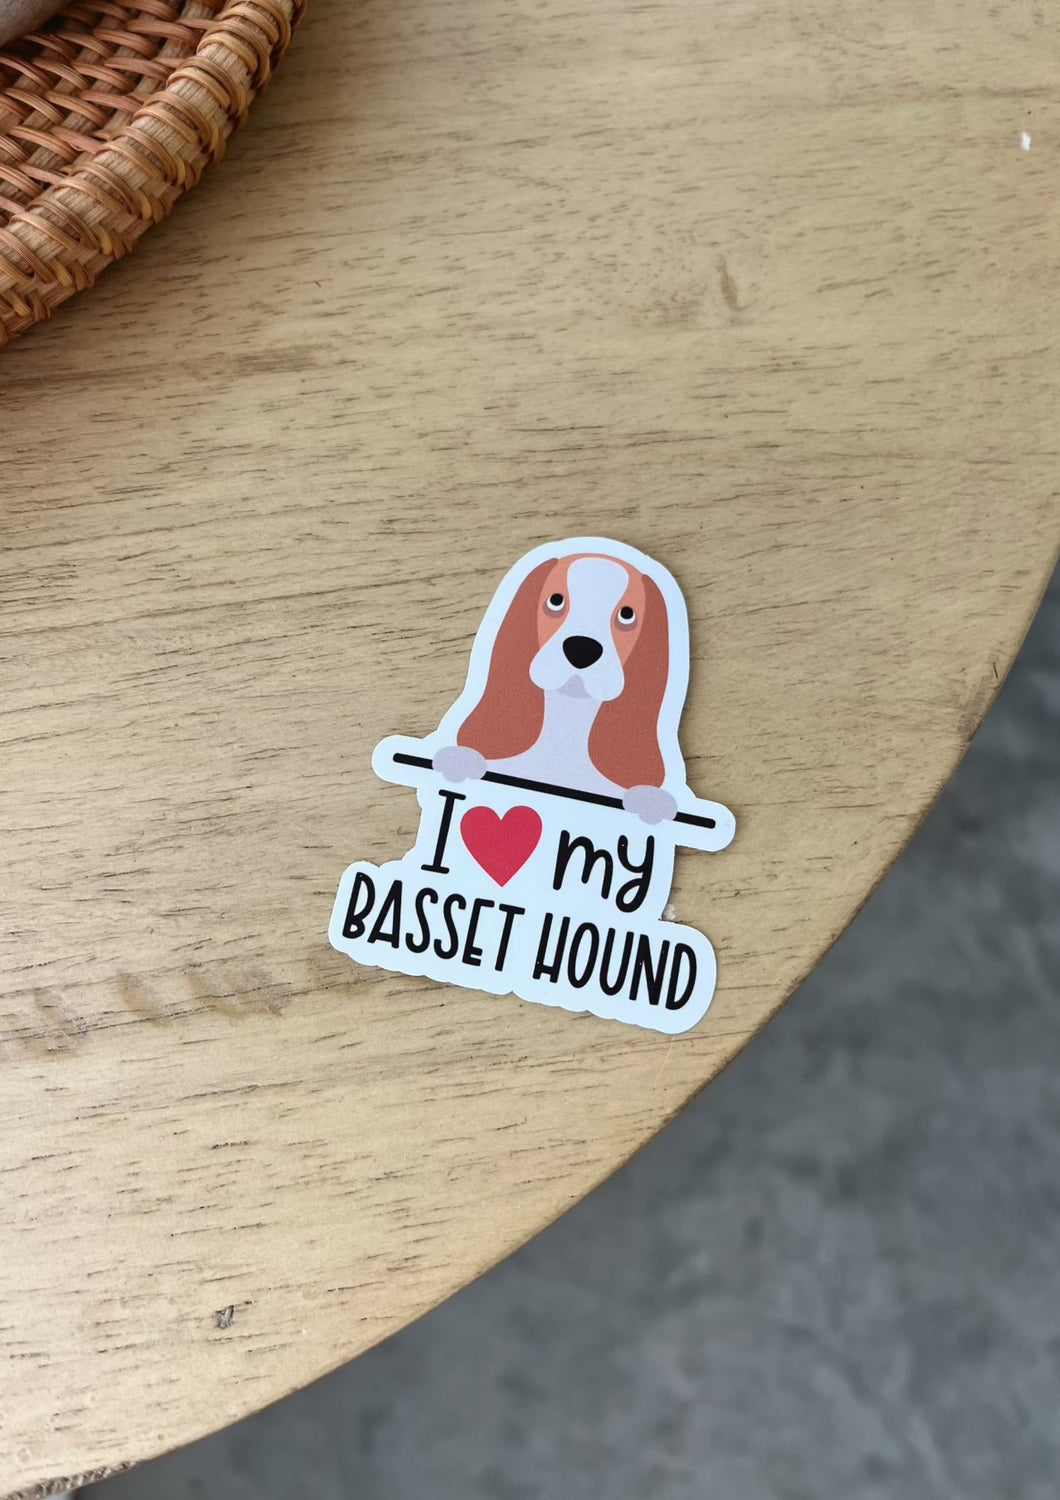 I Love My Dog Stickers